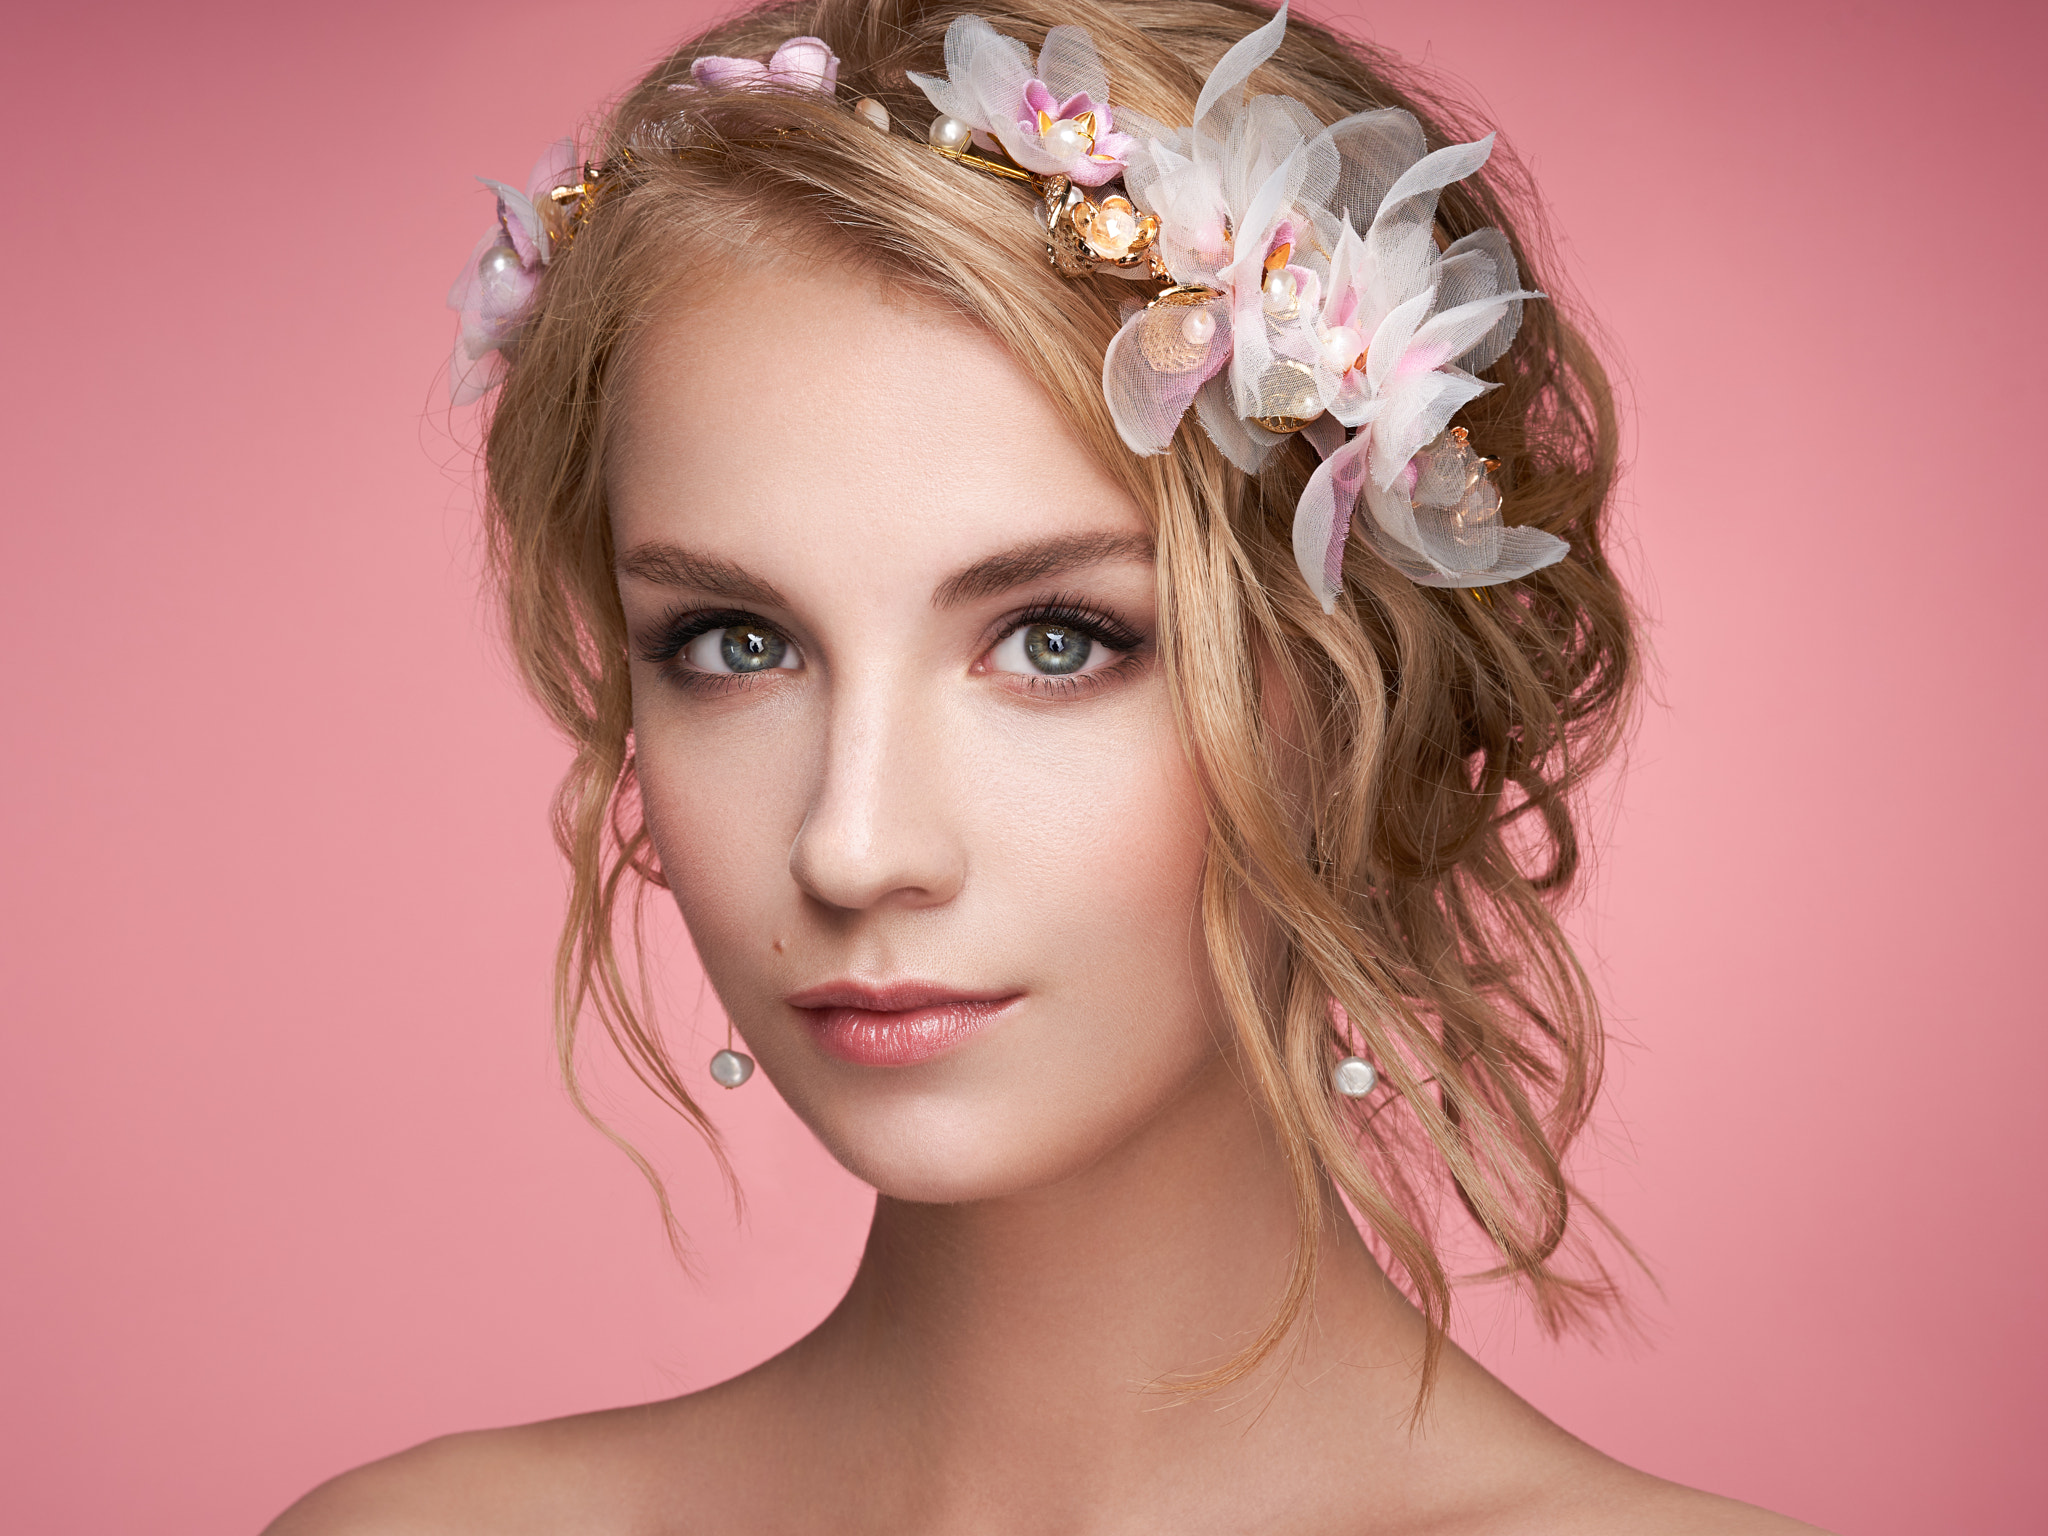 Oleg Gekman Women Blonde Hairband Flowers Makeup Earring Lipstick Eyeliner Lip Gloss Looking At View 2048x1536